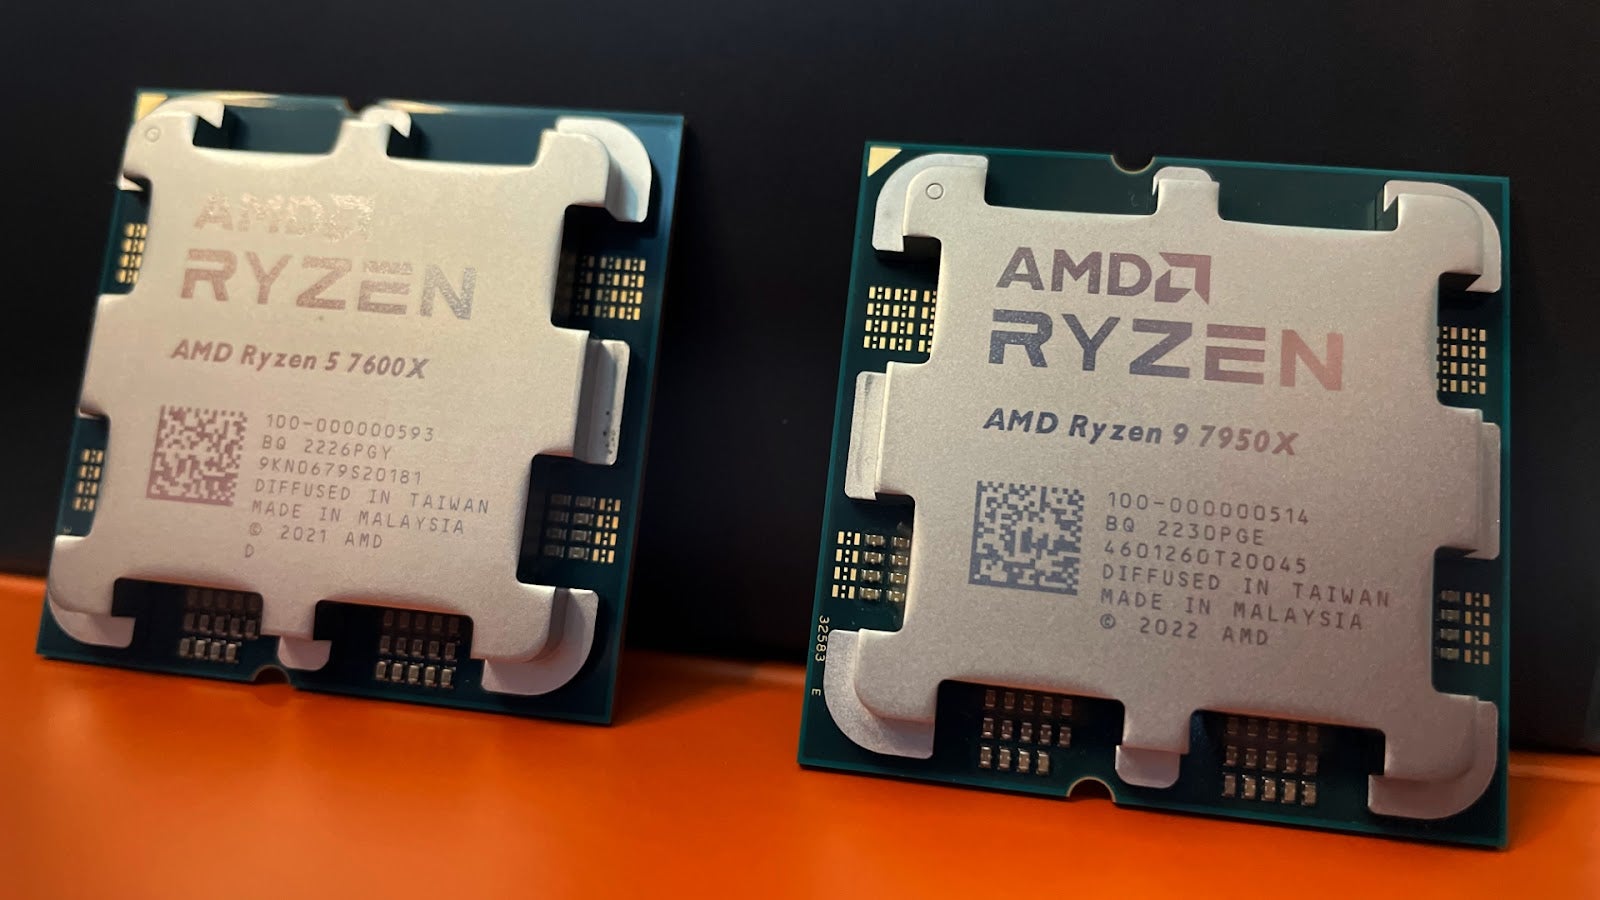 AMD Ryzen 5 7600X and Ryzen 9 7950X CPUs